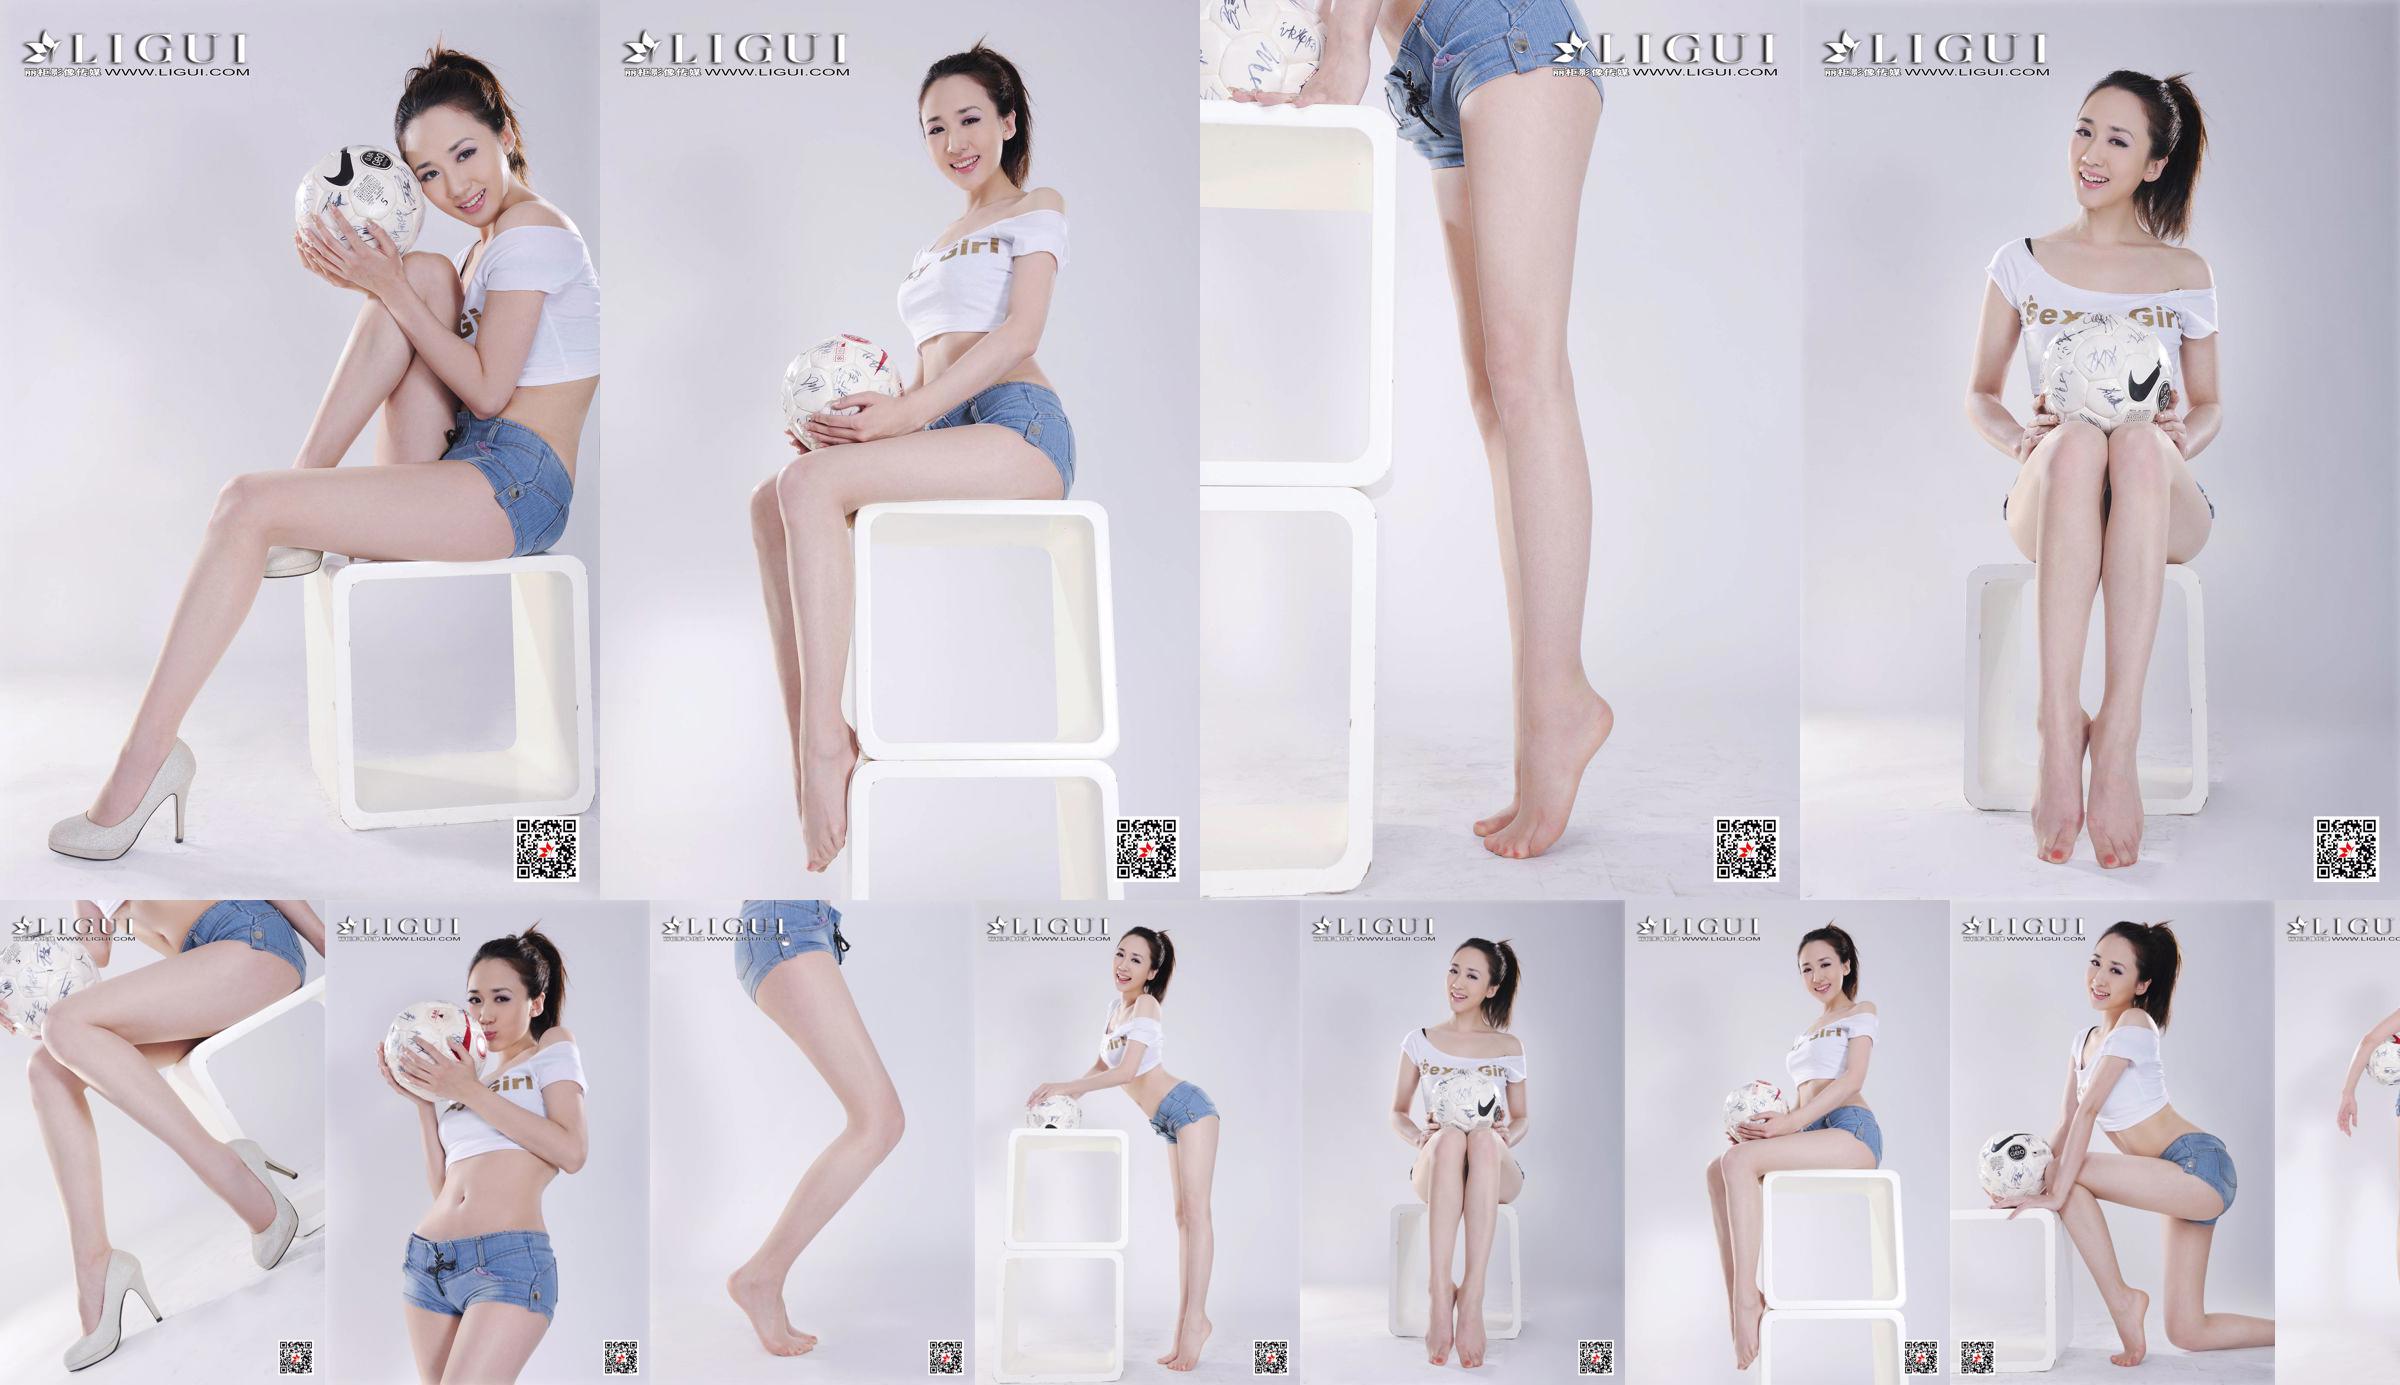 Model Qiu Chen "Gadis Sepak Bola Celana Super Pendek" [LIGUI] No.39443c Halaman 1